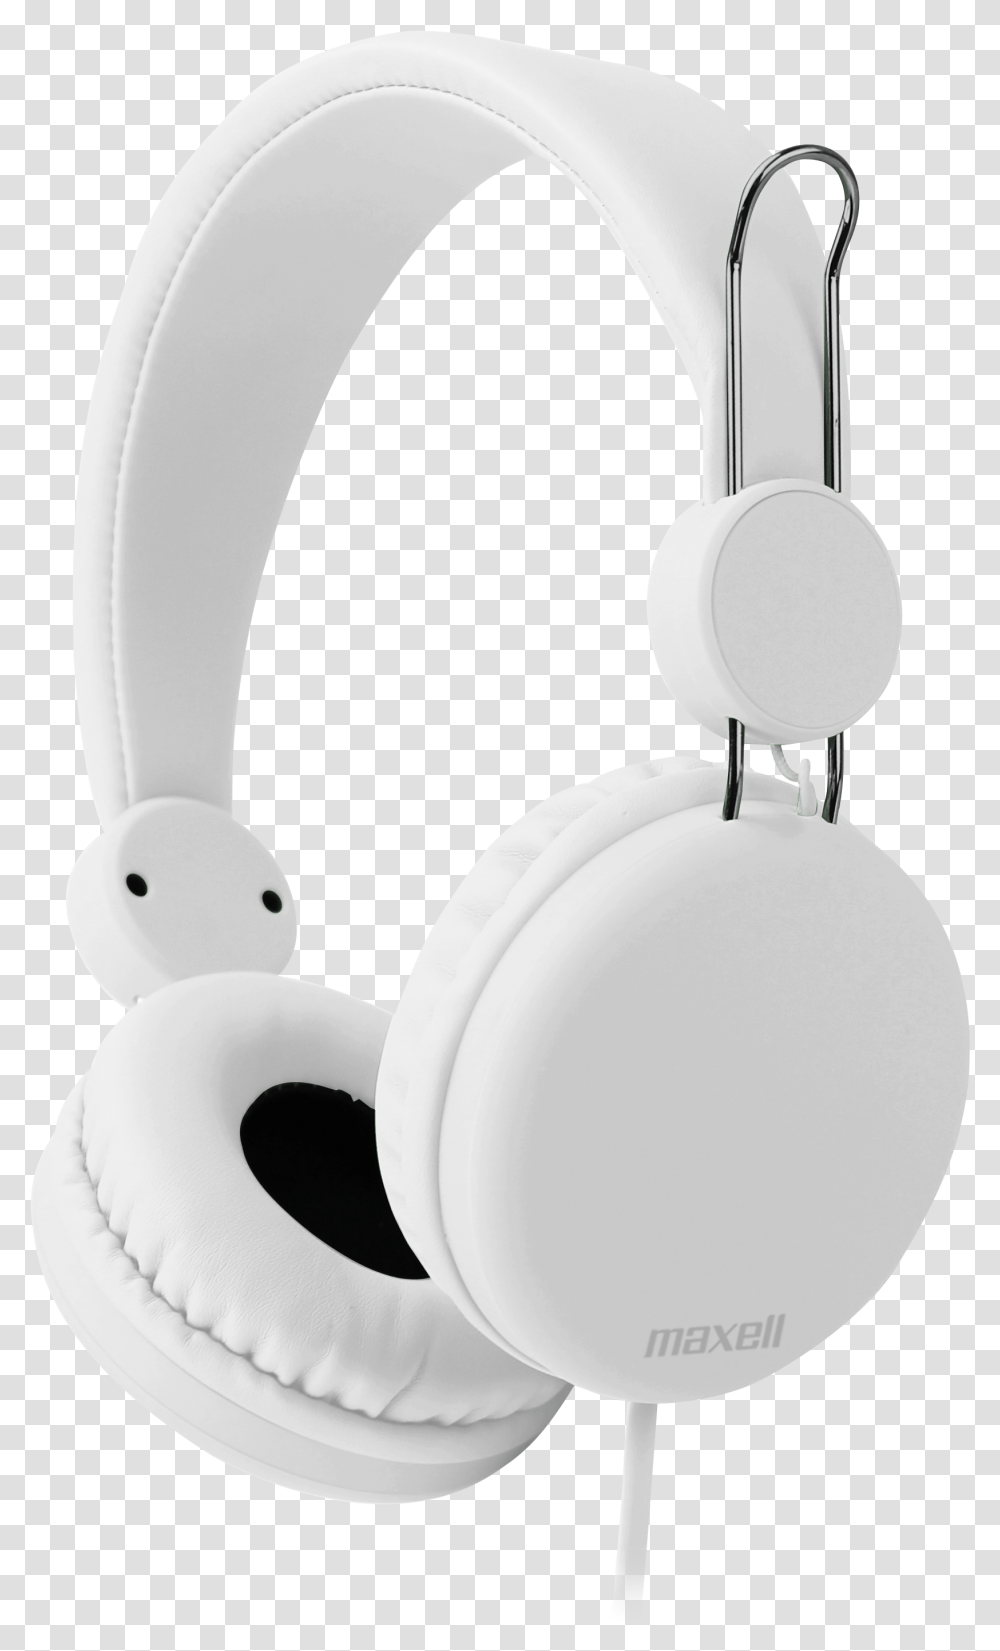 Sms 10s Spectrum Headphones - Maxell Asia Ltd Headphones, Electronics, Headset, Snowman, Winter Transparent Png